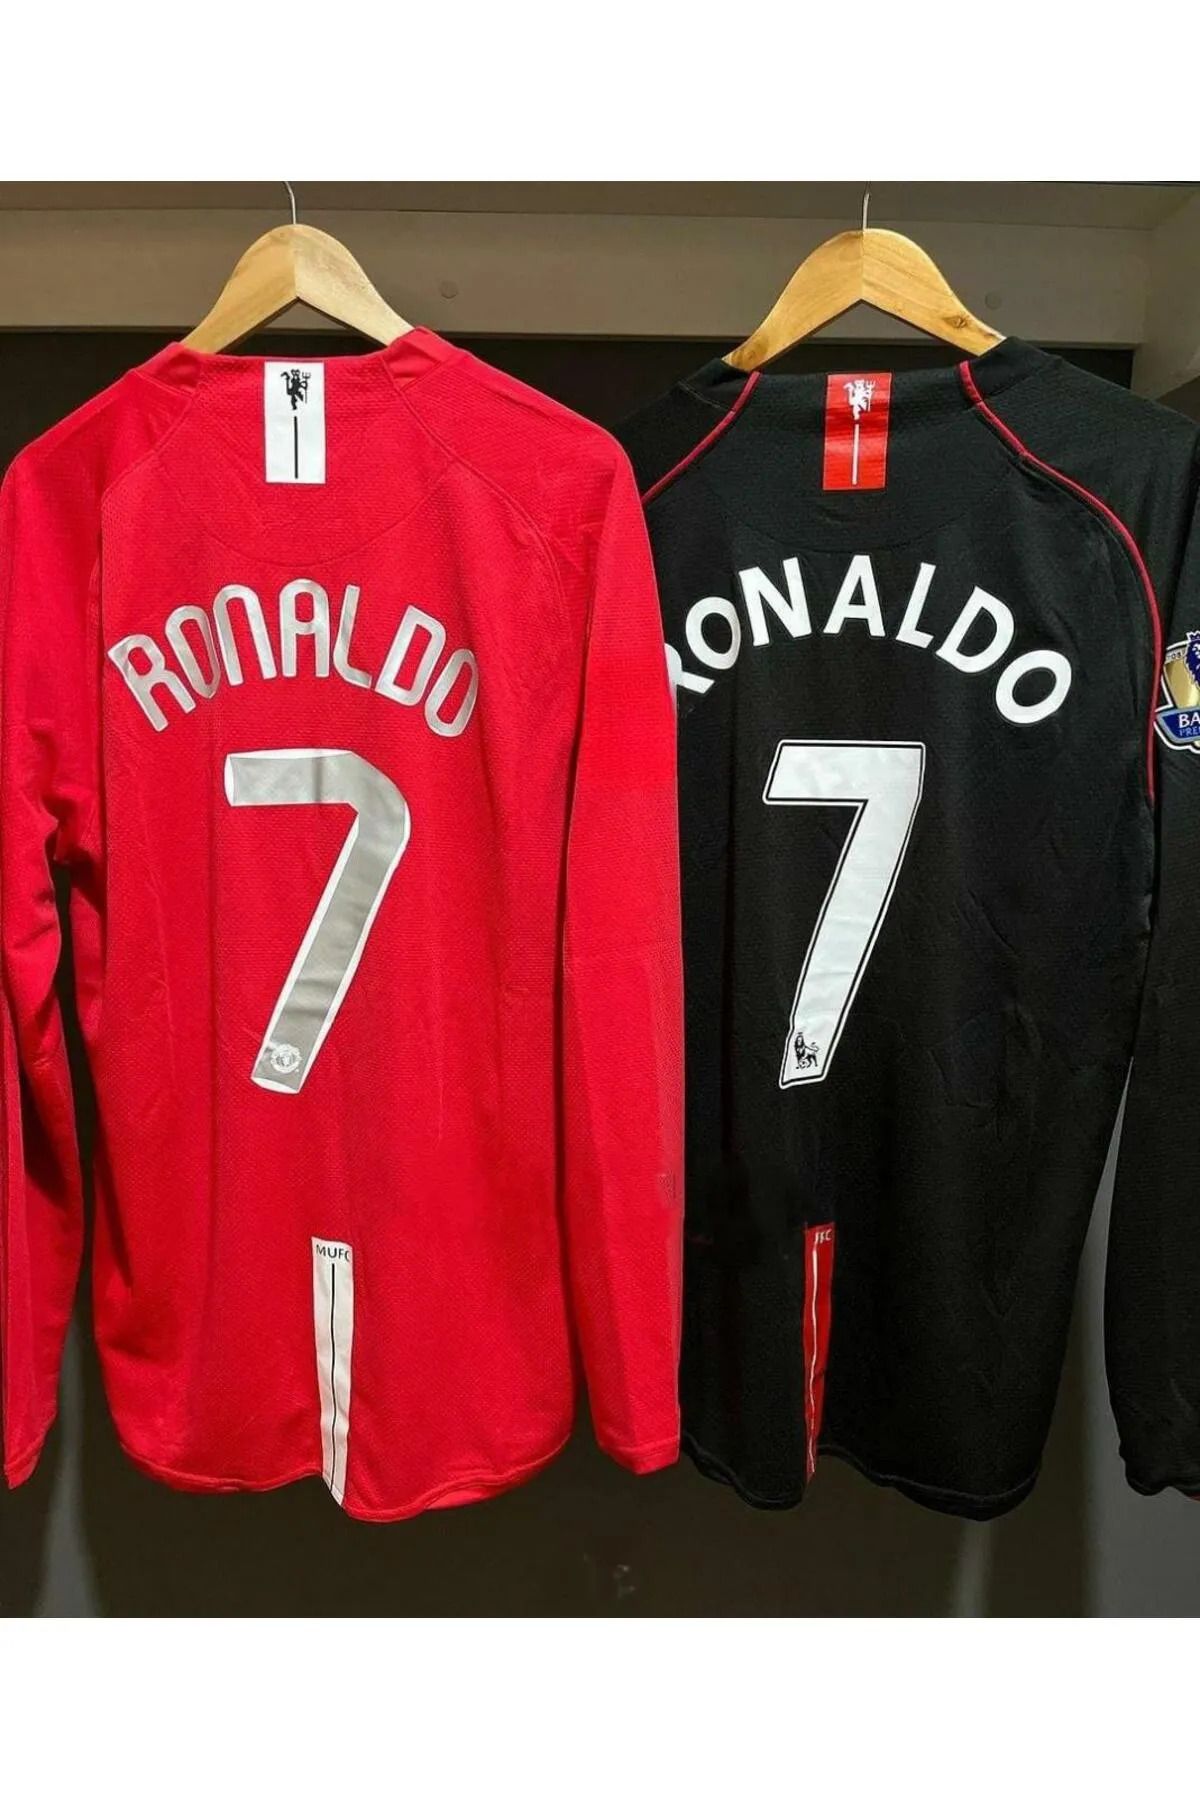 Lion Spor Cristiano Ronaldo 2'li Set Manchester United Nostalji Uzun Kollu Forma Seti